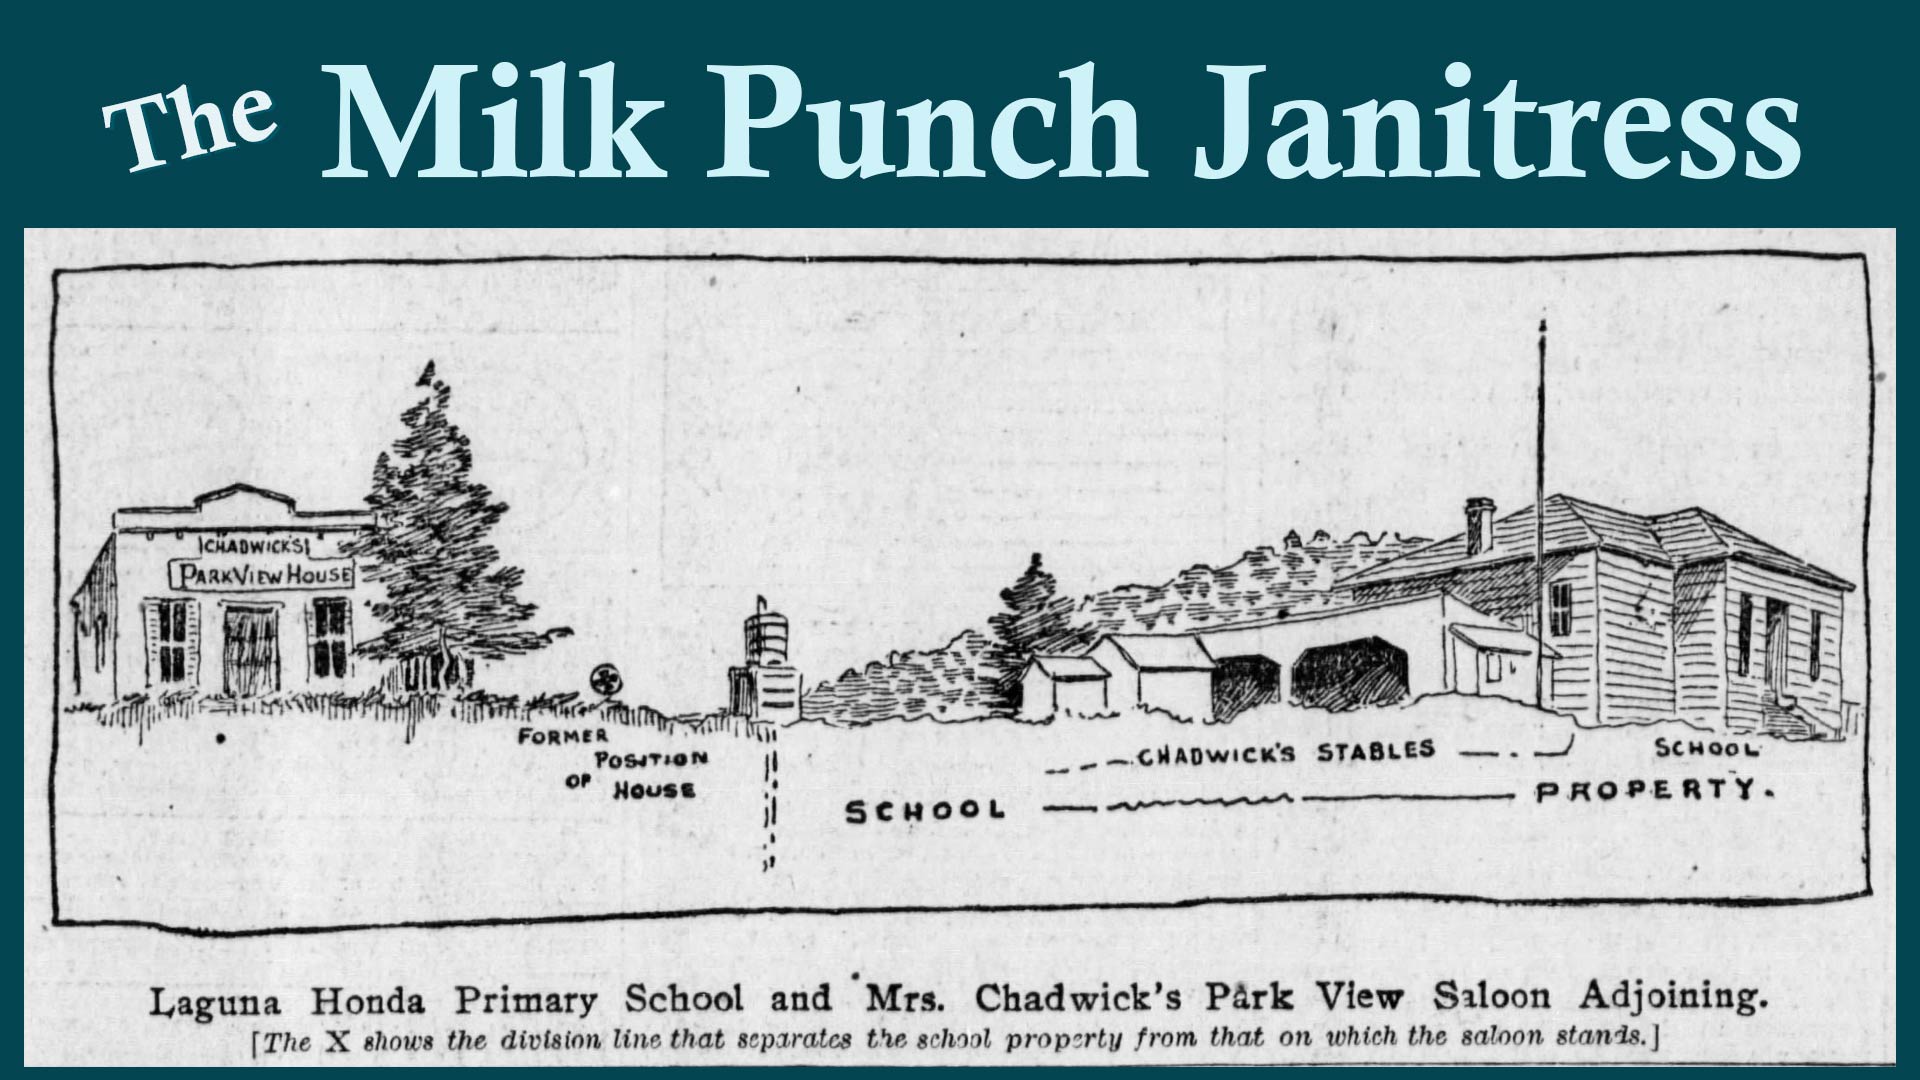 The Milk Punch Janitress